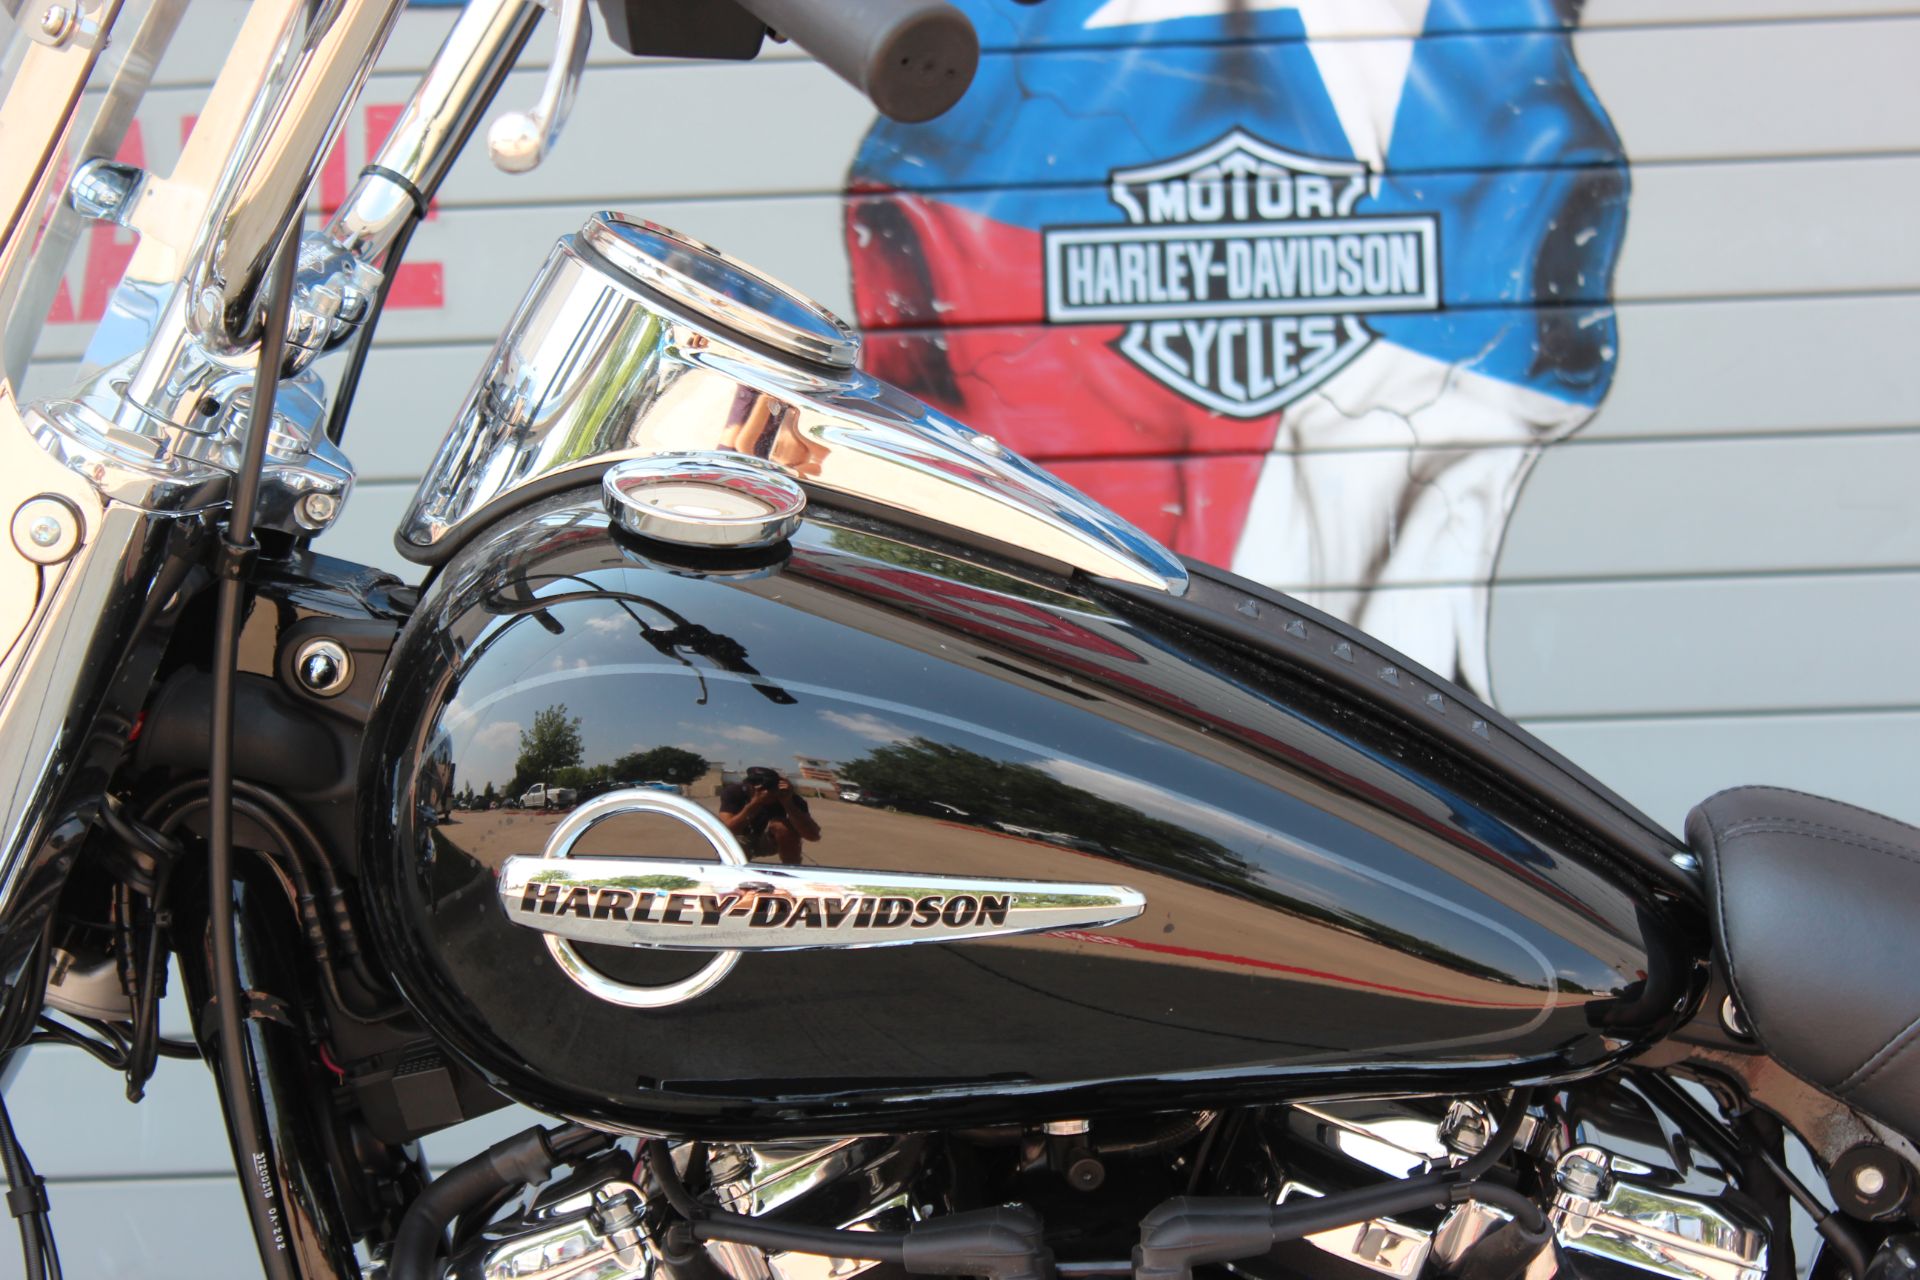 2020 Harley-Davidson Heritage Classic in Grand Prairie, Texas - Photo 16